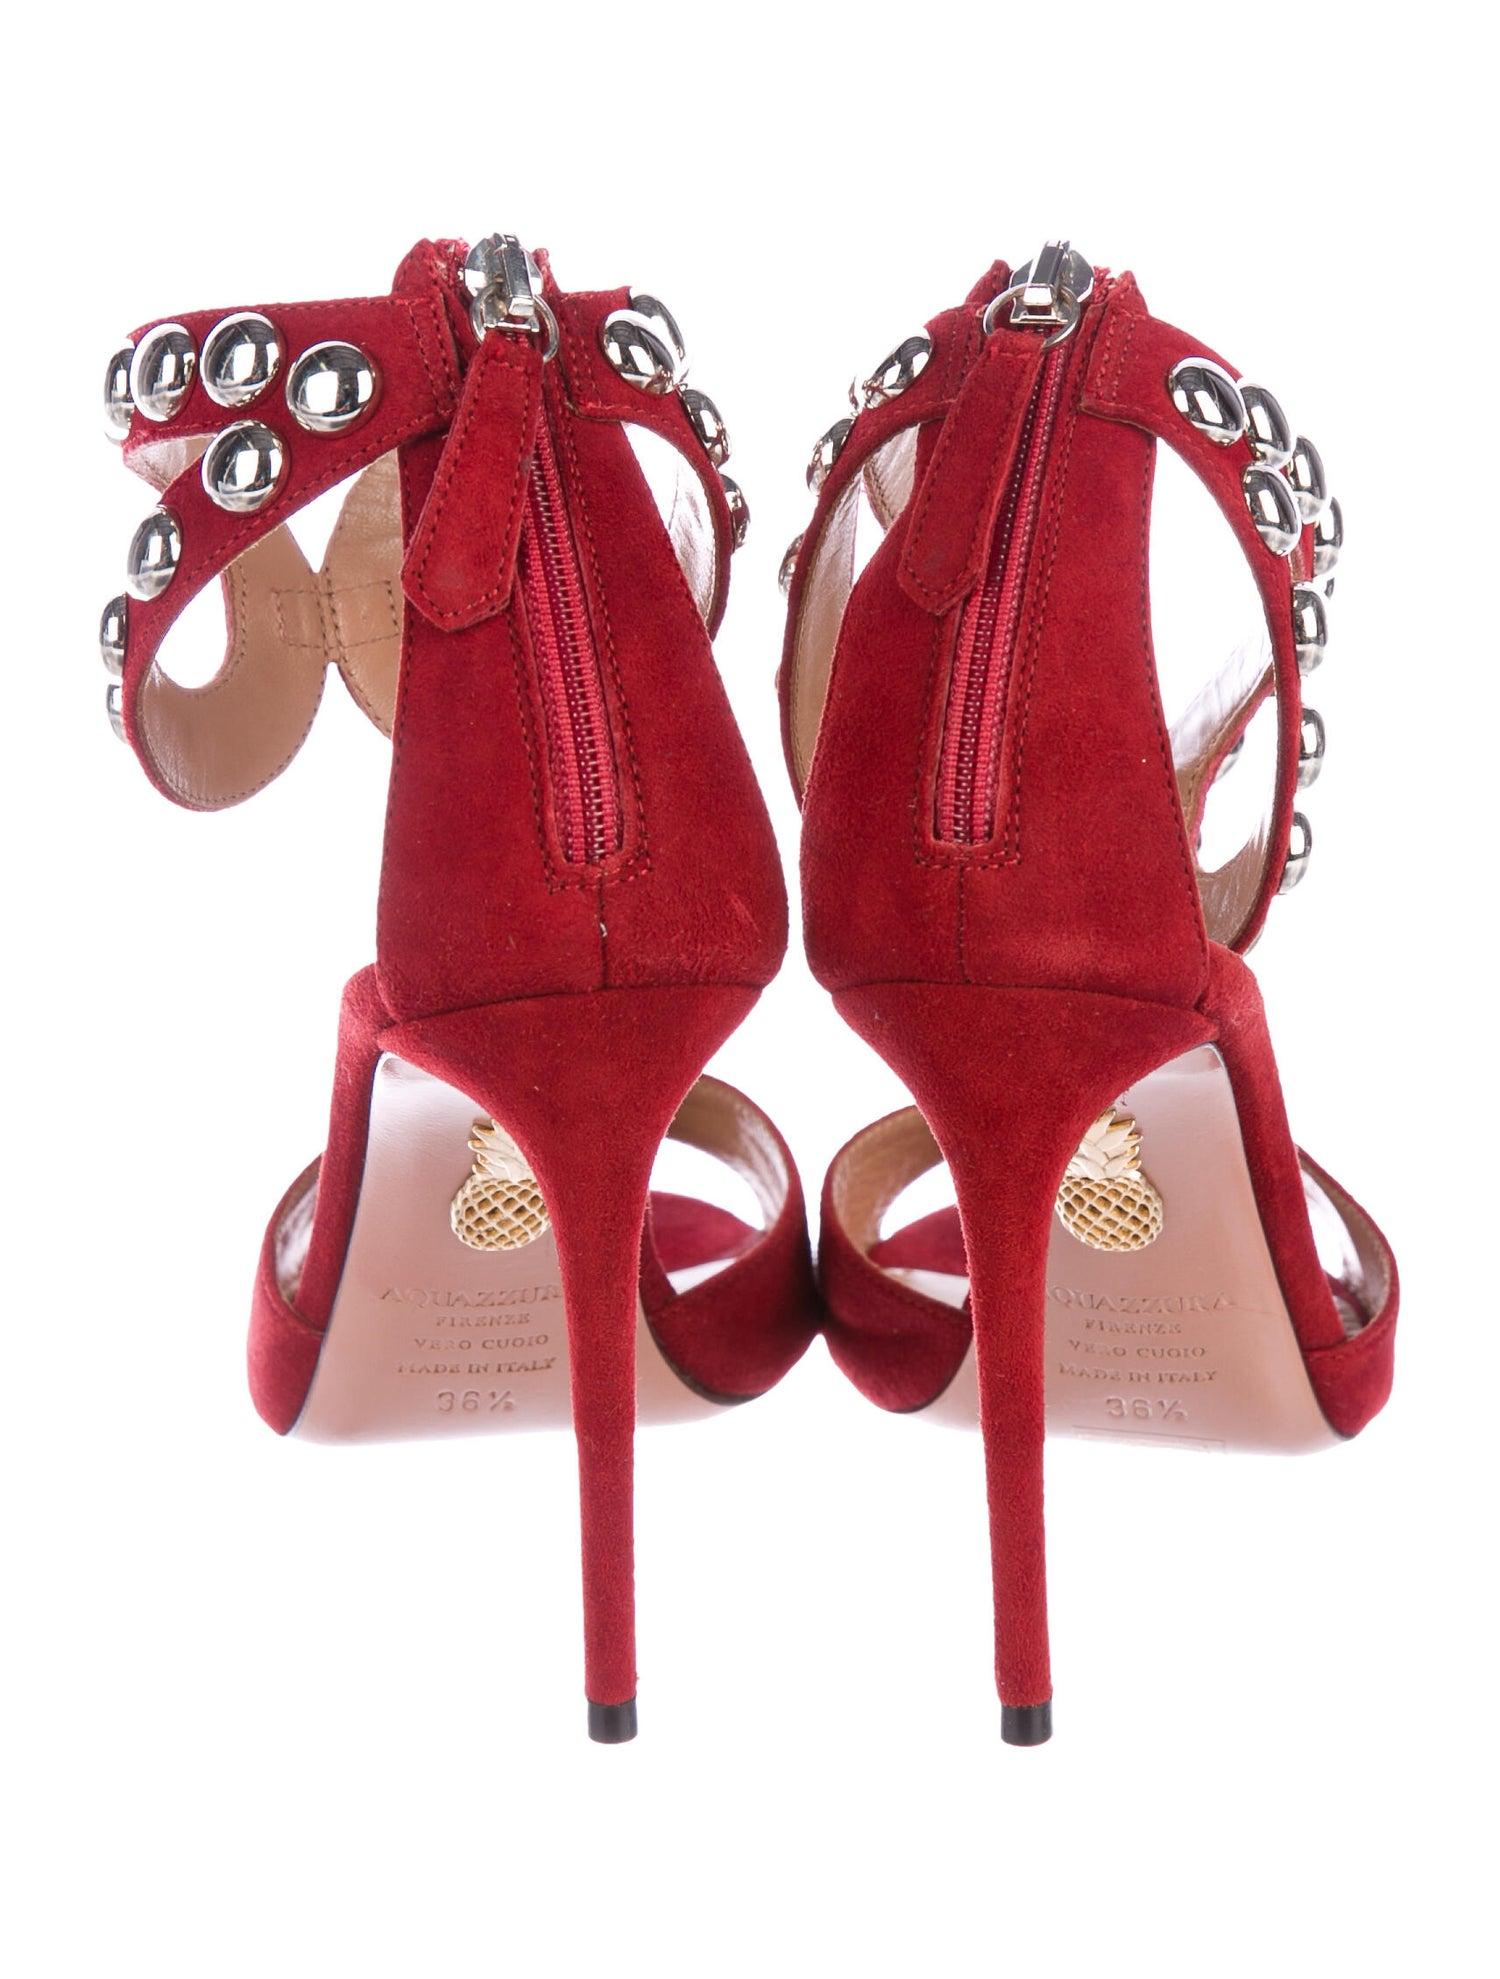 Aquazurra NEW Red Suede Silver Stud Evening Sandals Heels Pumps in Box 1